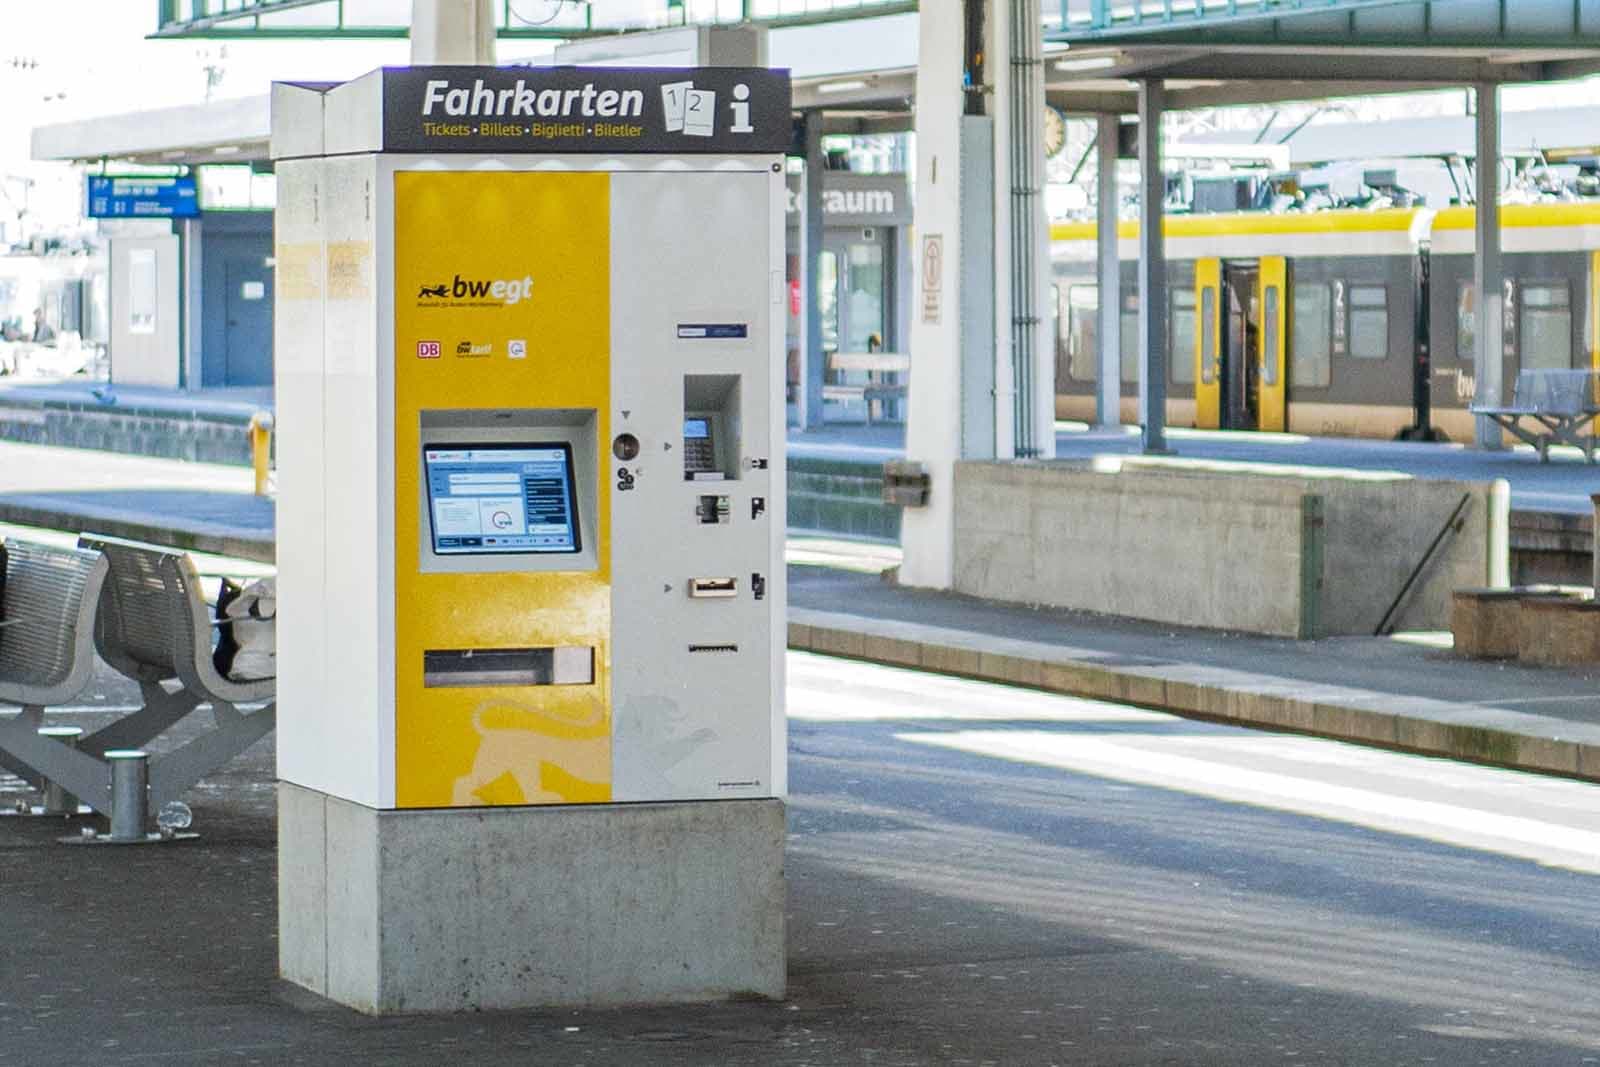 Fahrkartenautomat am Bahnhof